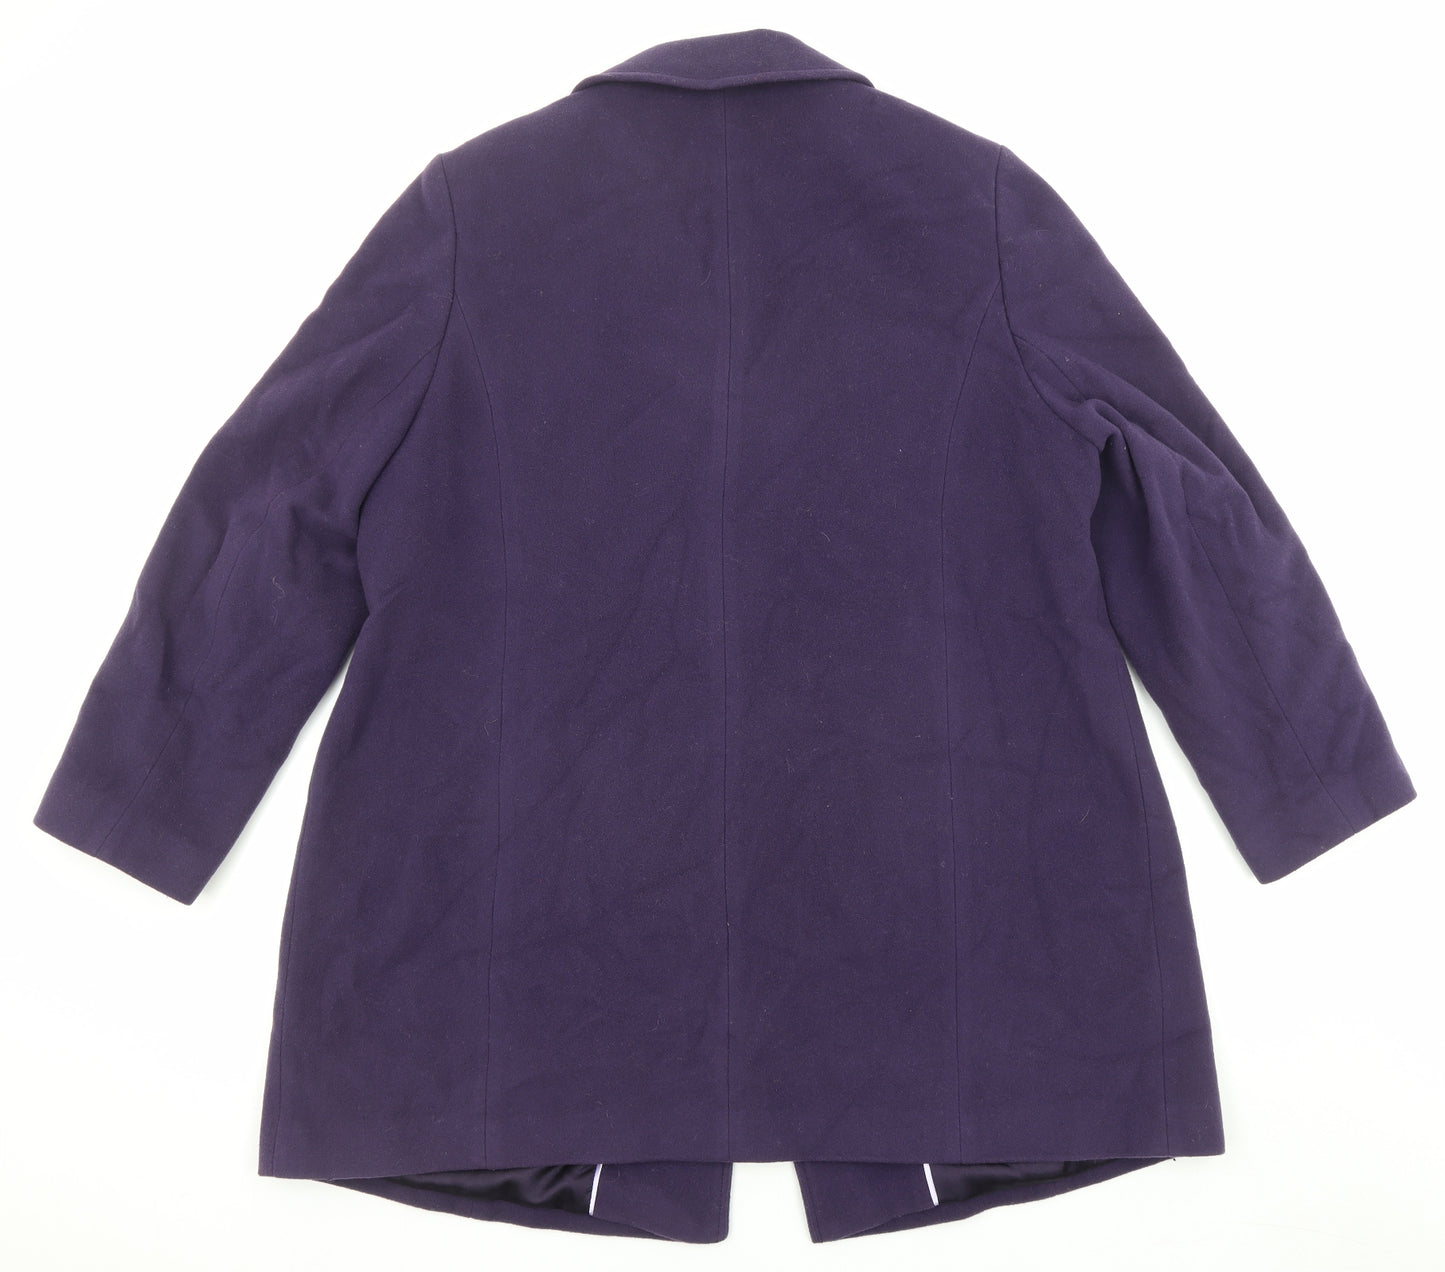 Eastex Womens Purple Pea Coat Coat Size 18 Button